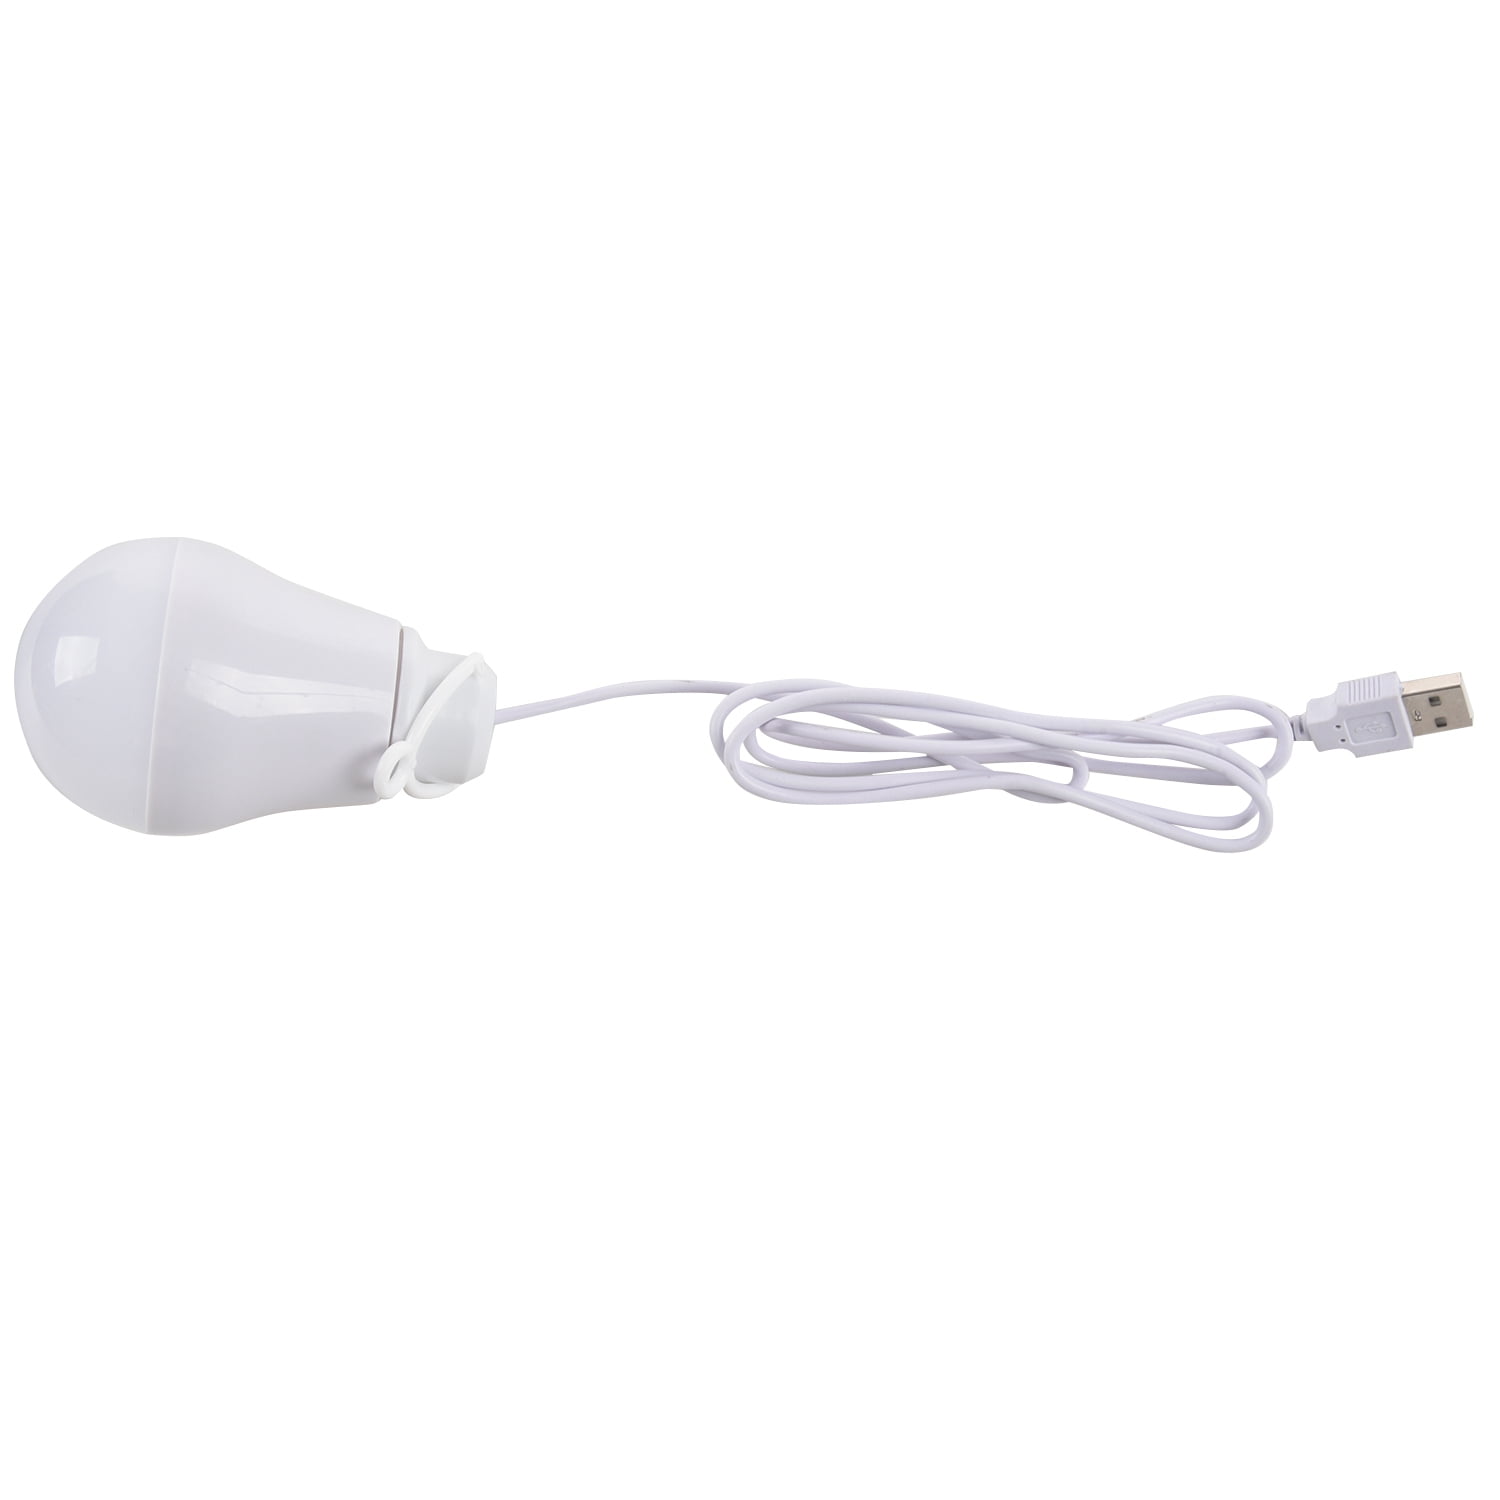 Portable USB LED Bulb Lamp DC5V-5W Reading Outdoor Camping Light White UF01 